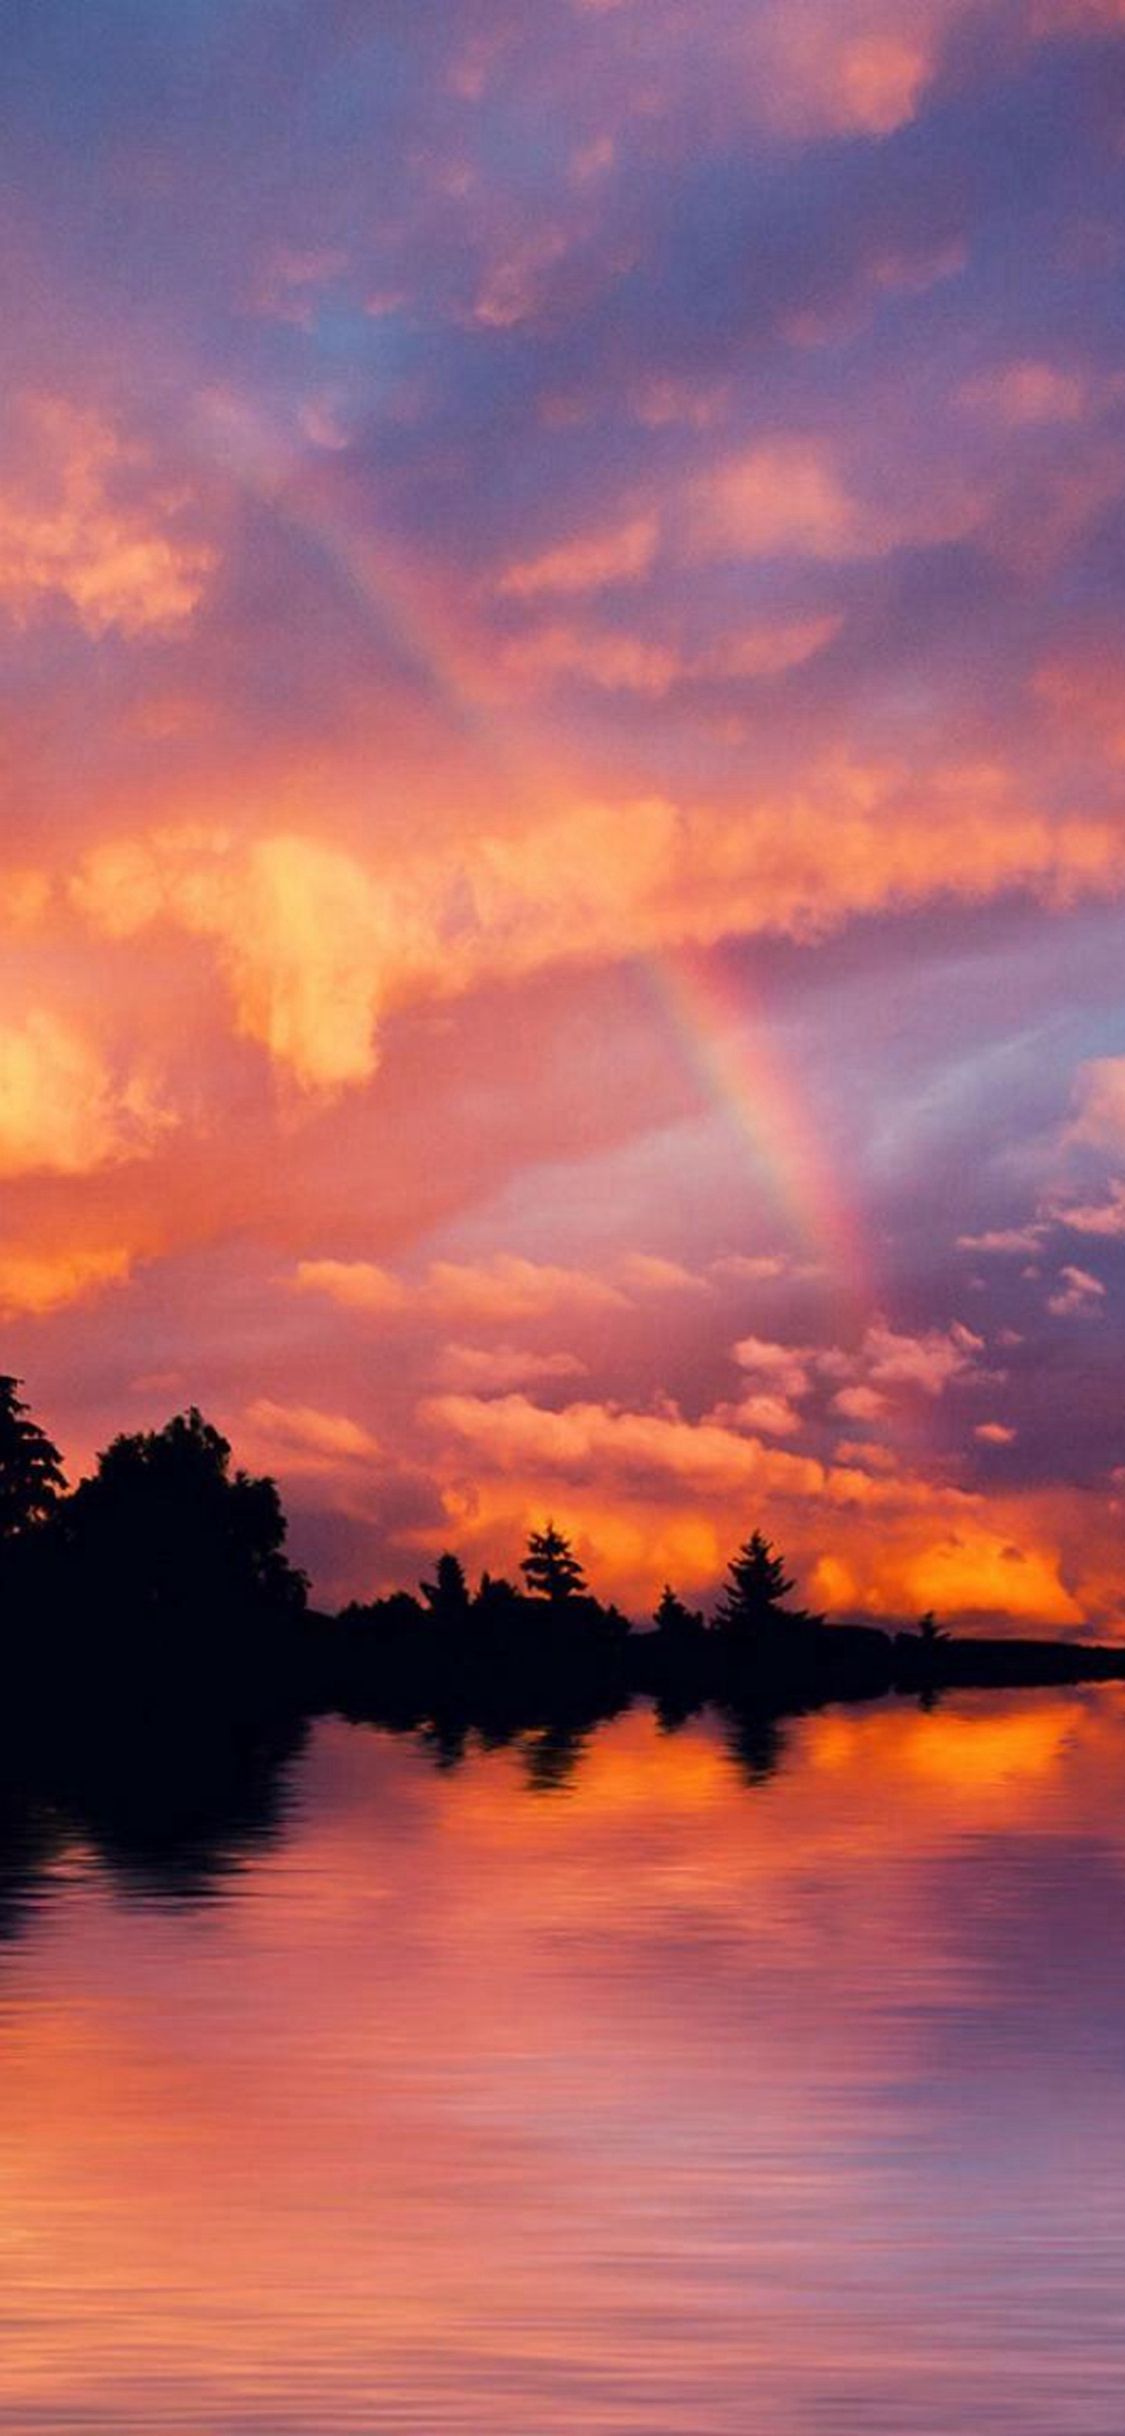 Nature Wonderful Colorful Sunset River Bank Landscape iPhone X 1125x2436